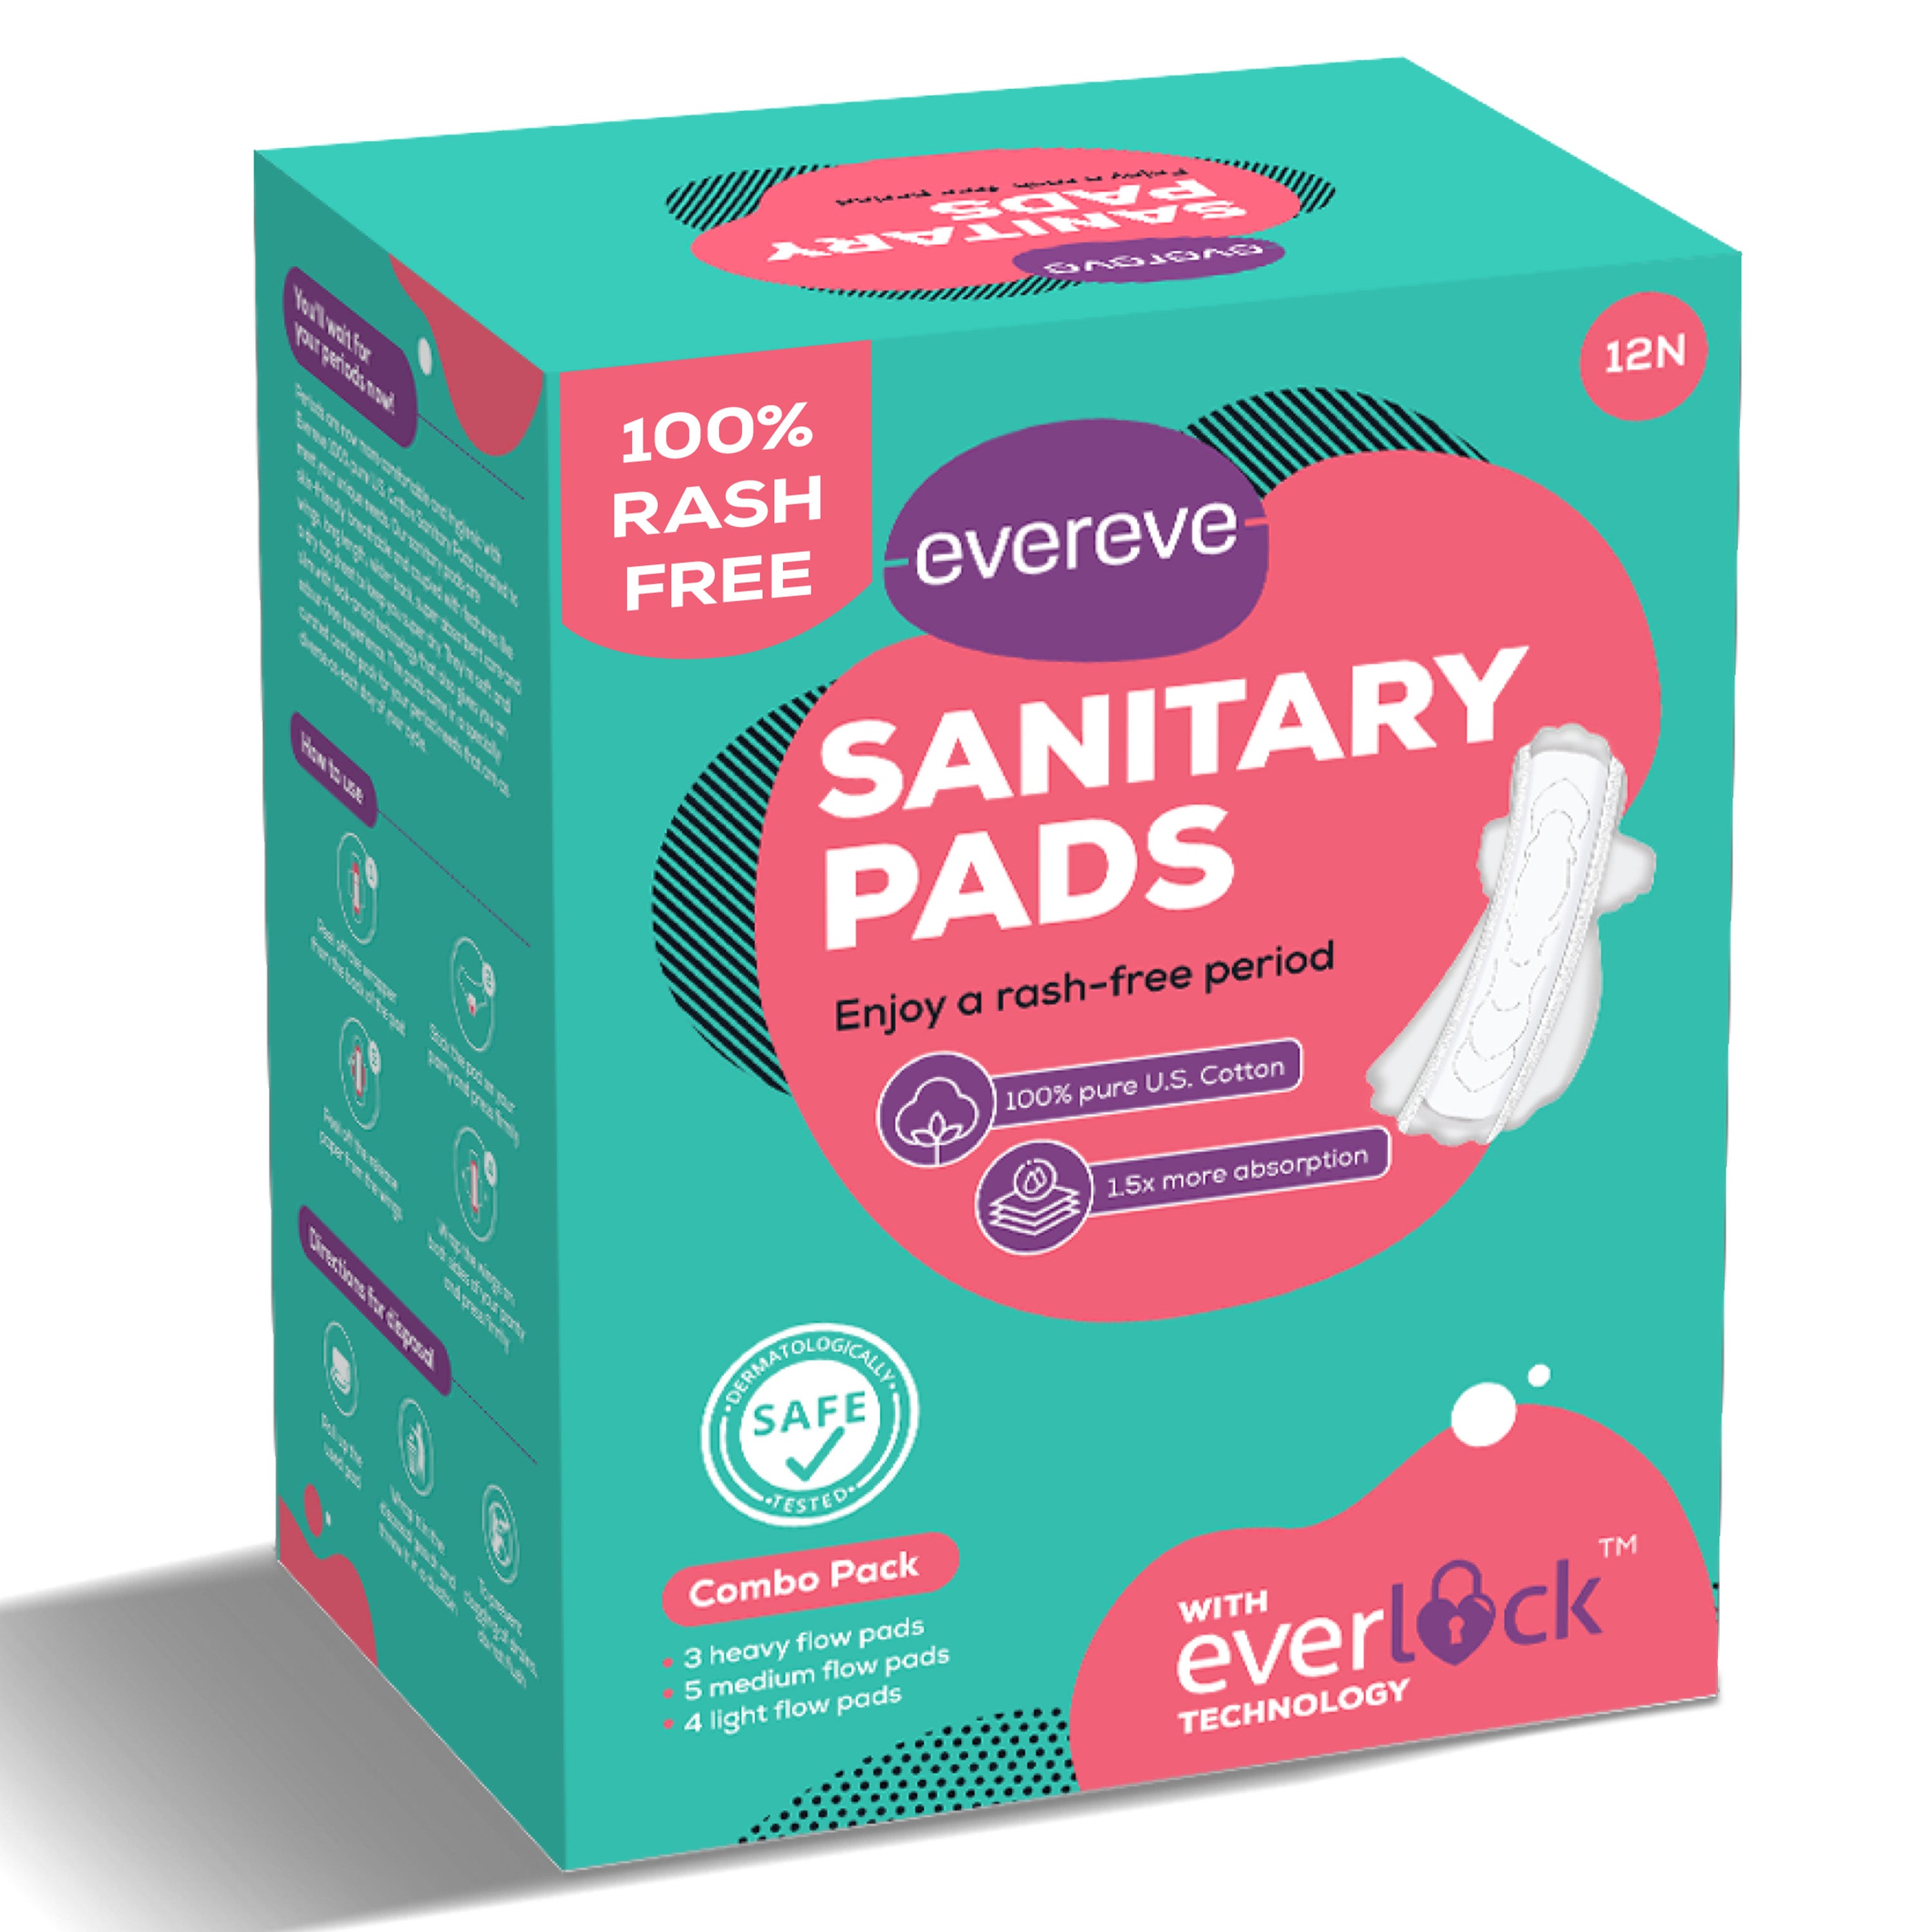 Cotton Sanitary Pads - Rashfree Women Pads by